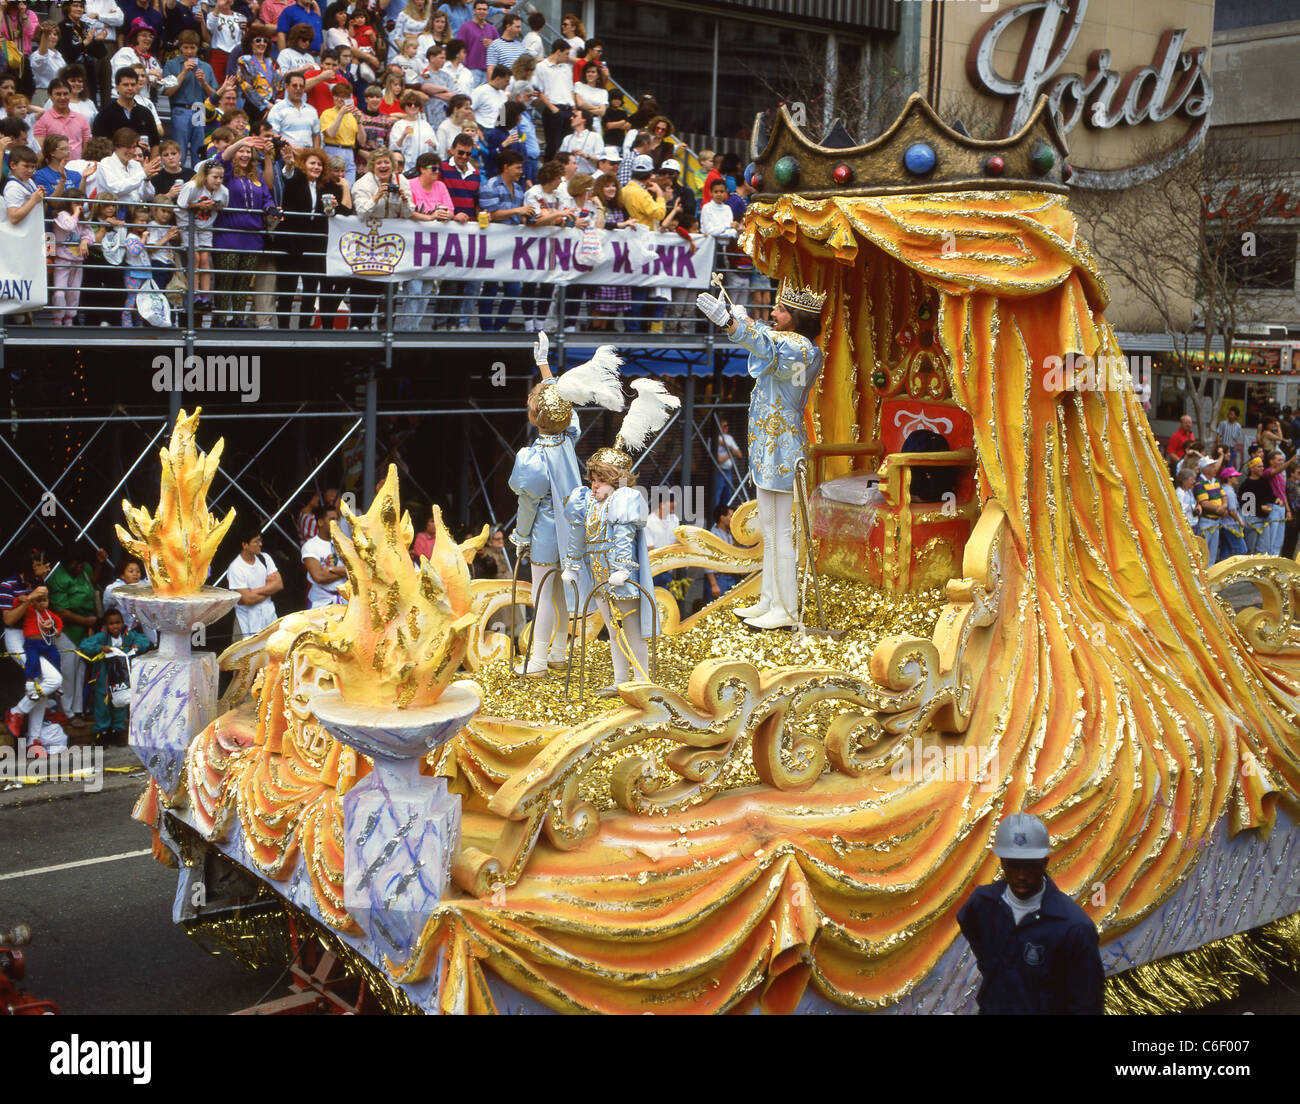 Mardi Gras parade float, French Quarter, New Orleans, Louisiana, United States of America Stock Photo